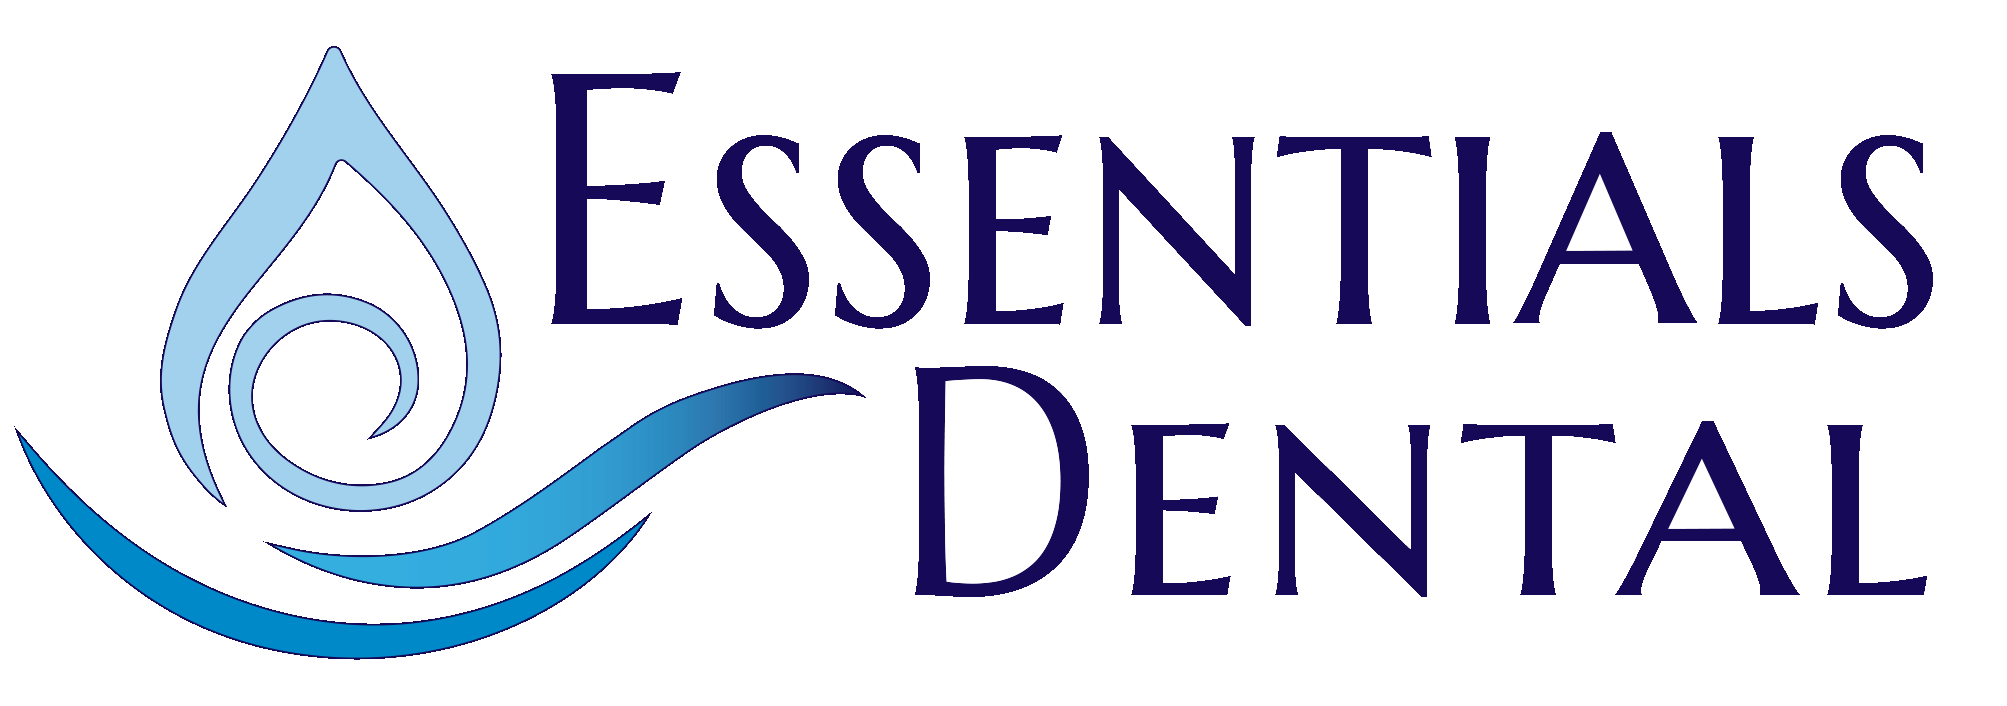 Essentials Dental - Dentists in Glendale Heights, IL. & Lombard, IL.